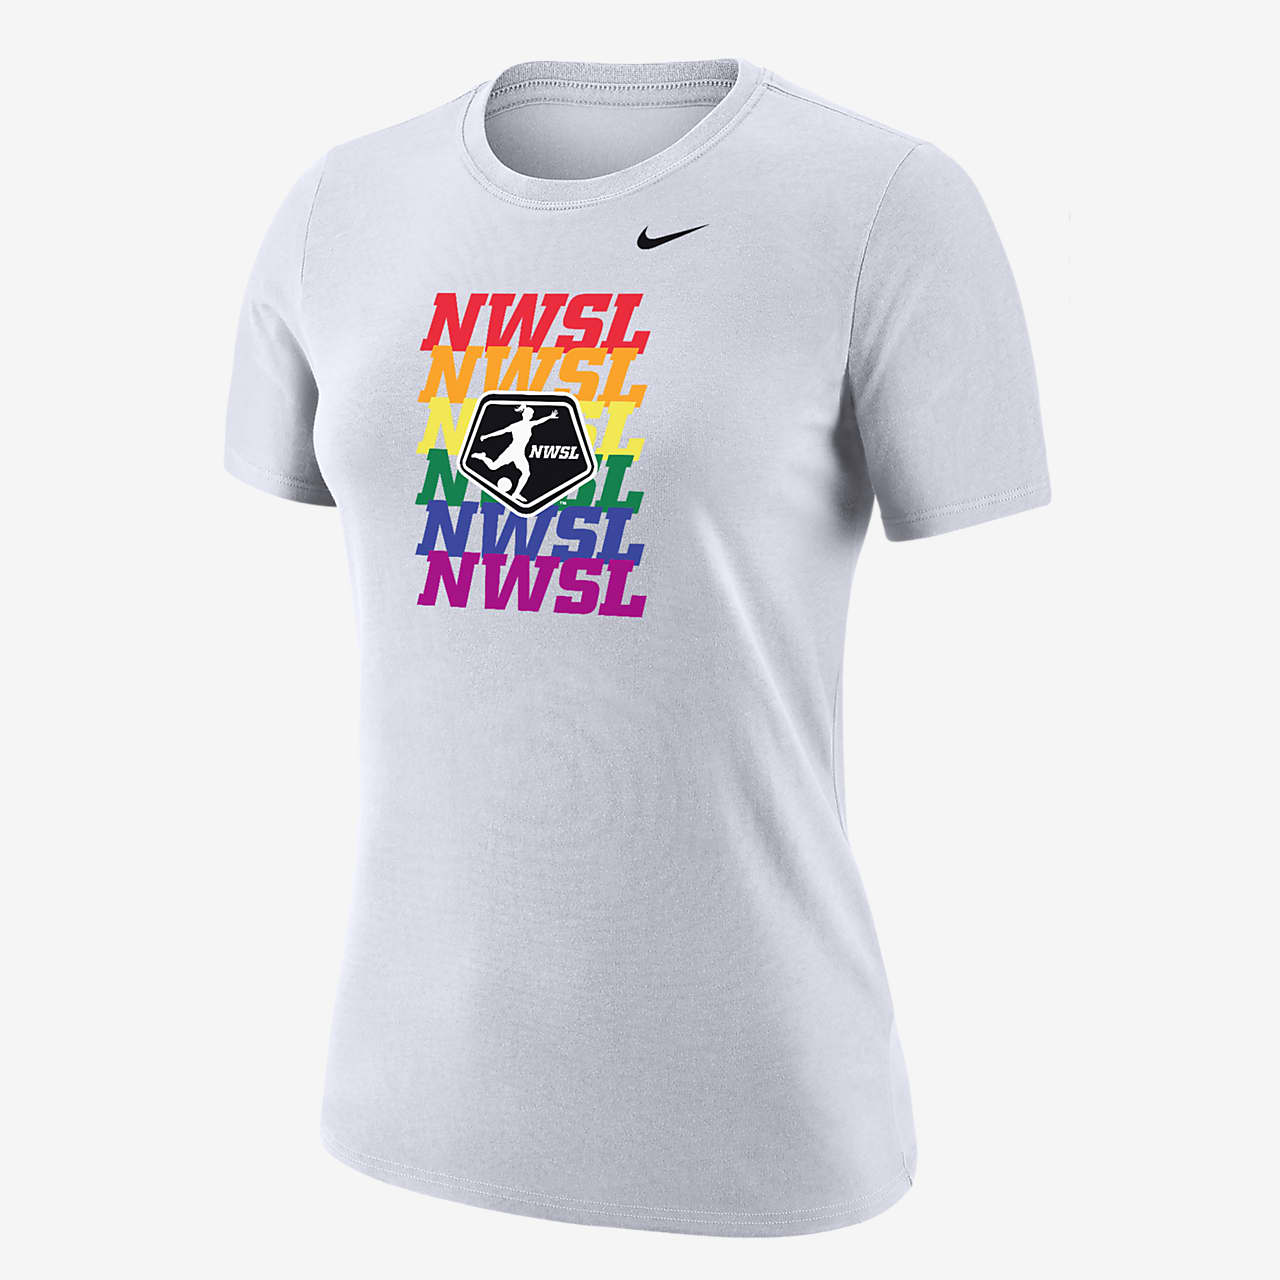 NWSL Women\'s Nike T-Shirt. Soccer